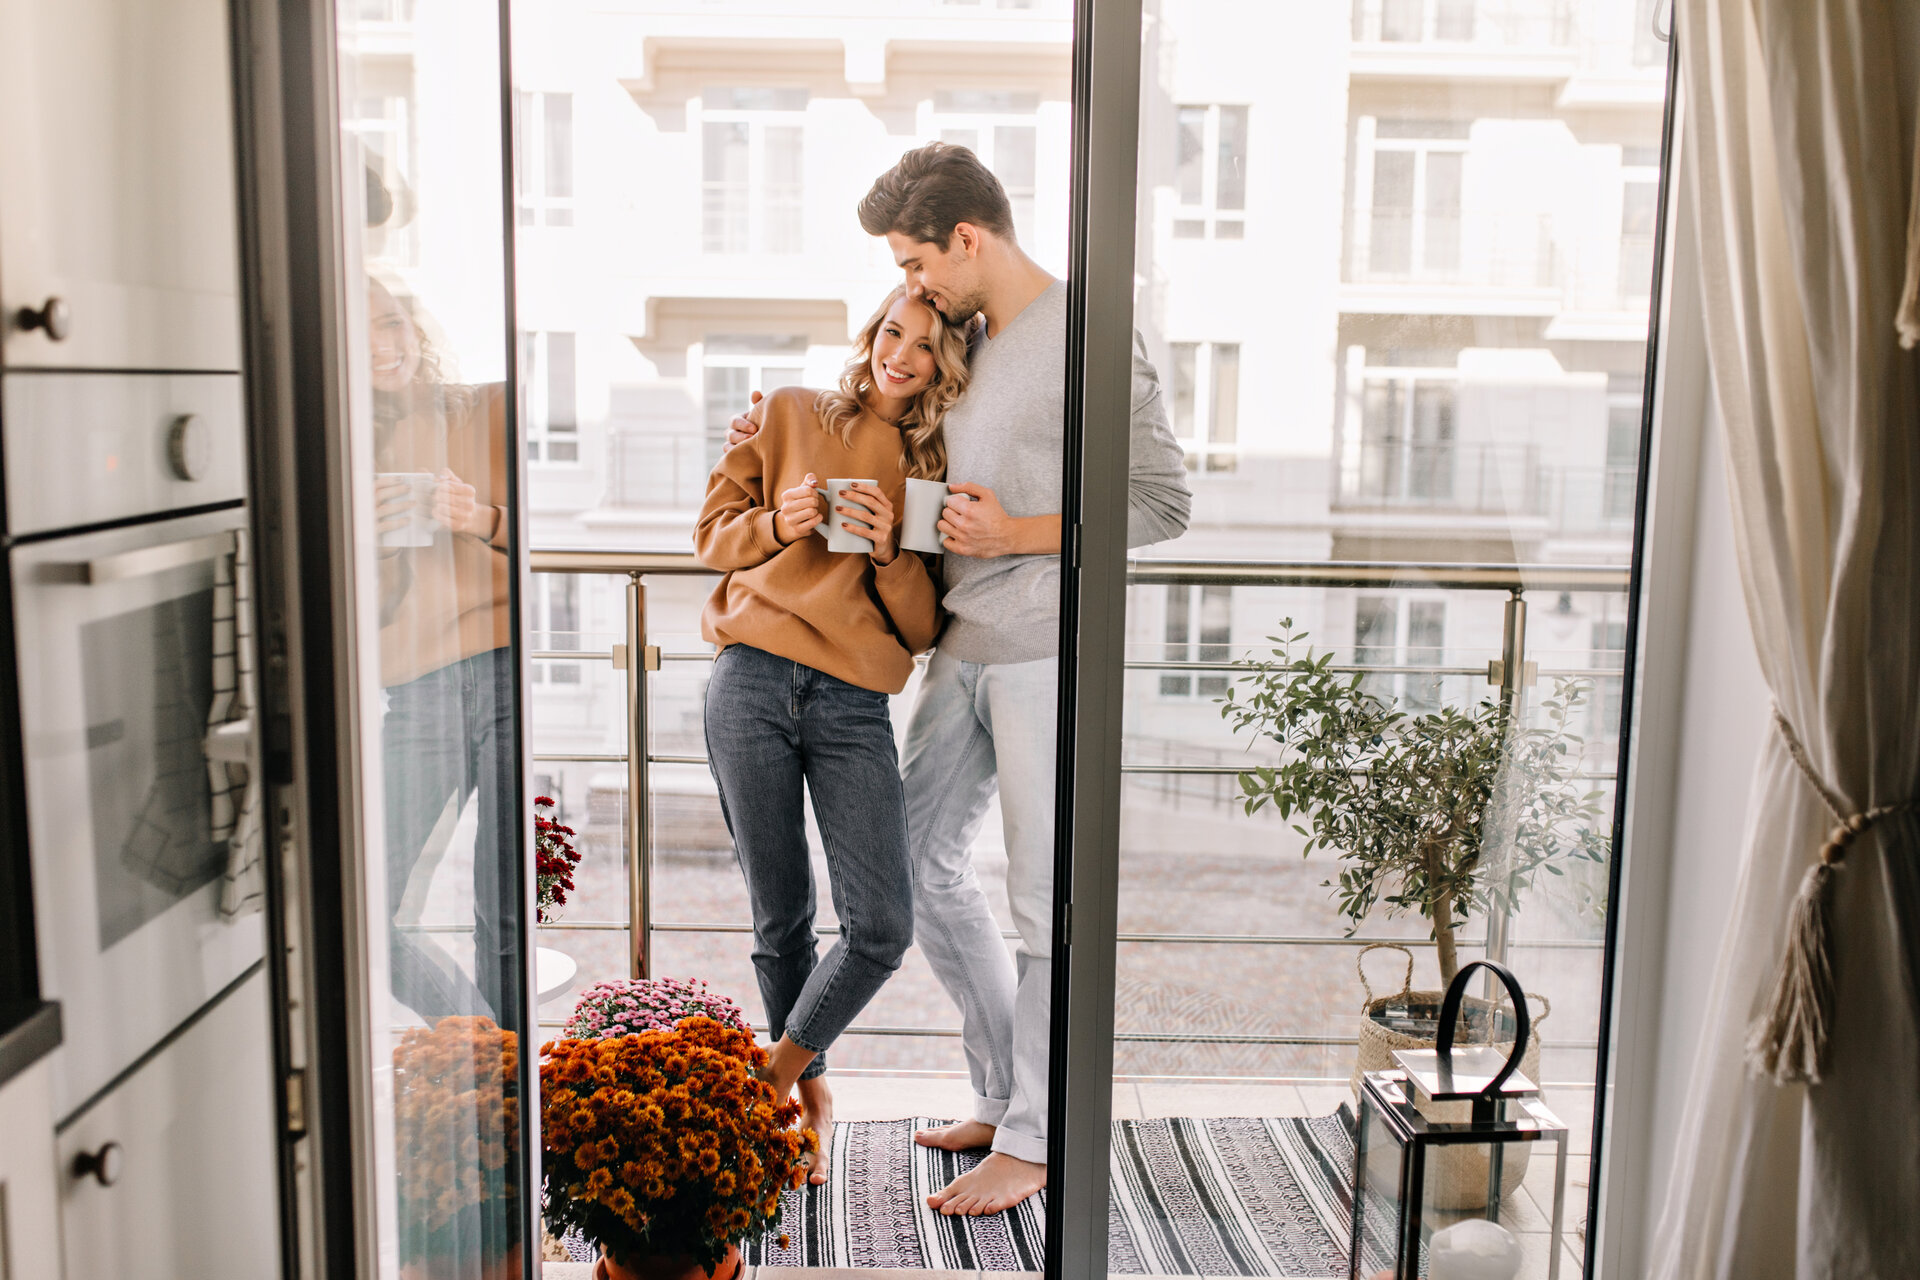 Mann umarmt Frau auf Balkon. Entspanntes Paar trinkt Kaffee am Wochenende.